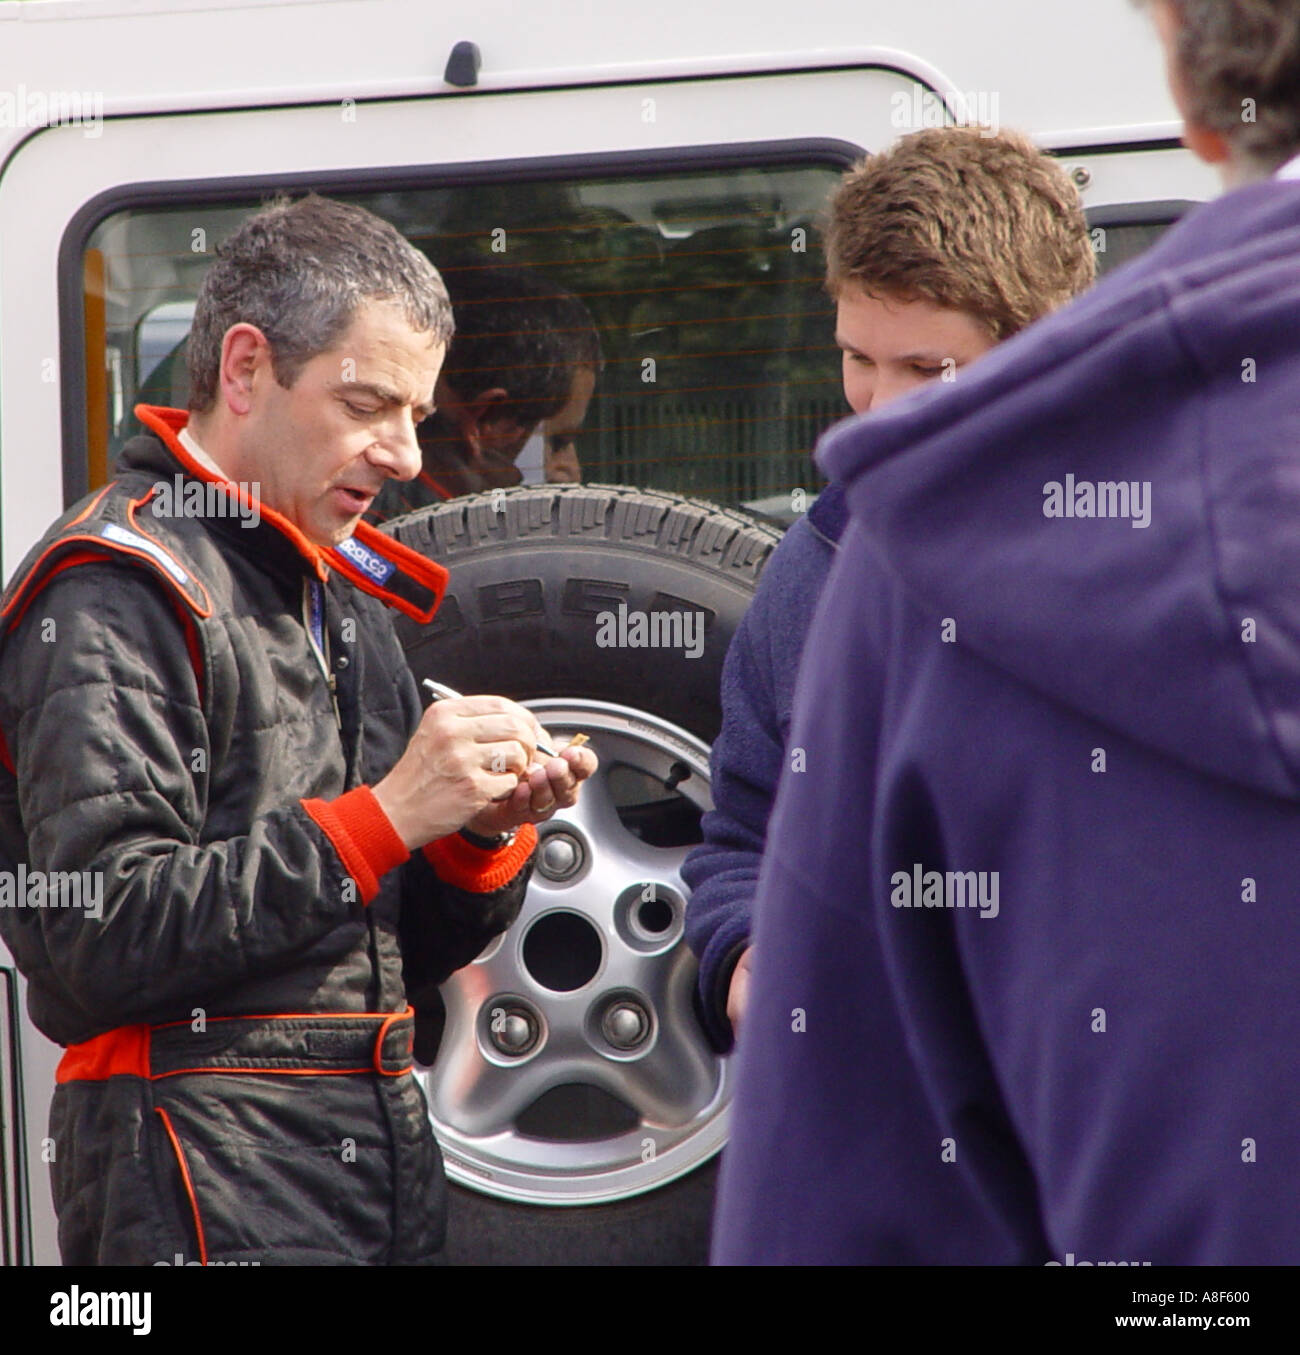 Rowan Atkinson: A Master of Comedy and Driving - Škoda Motorsport